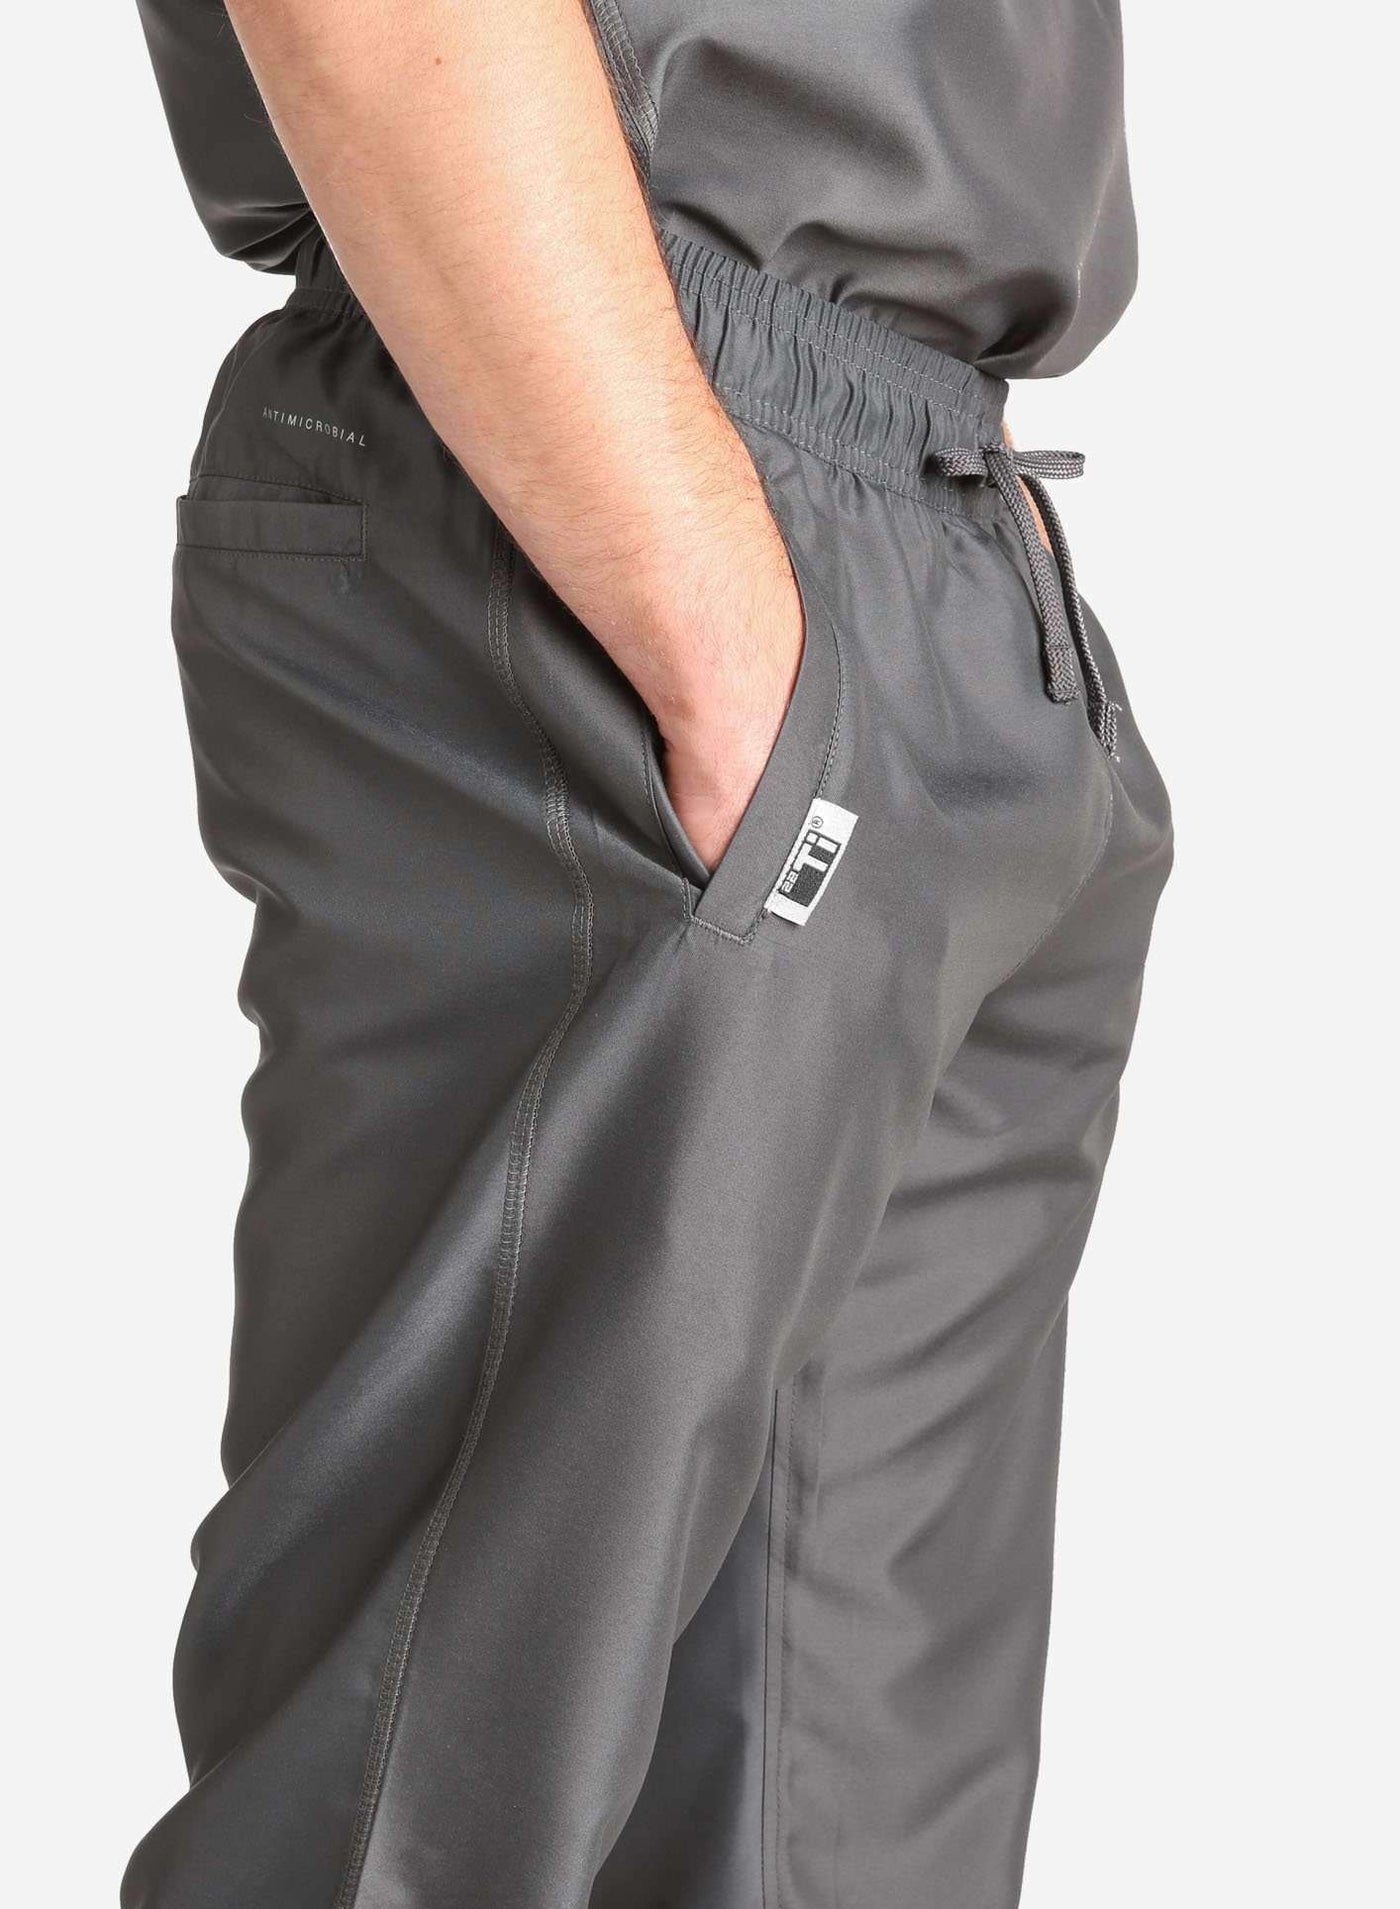 Men's Jogger Scrub Pants in Dark gray Pocket Detail View